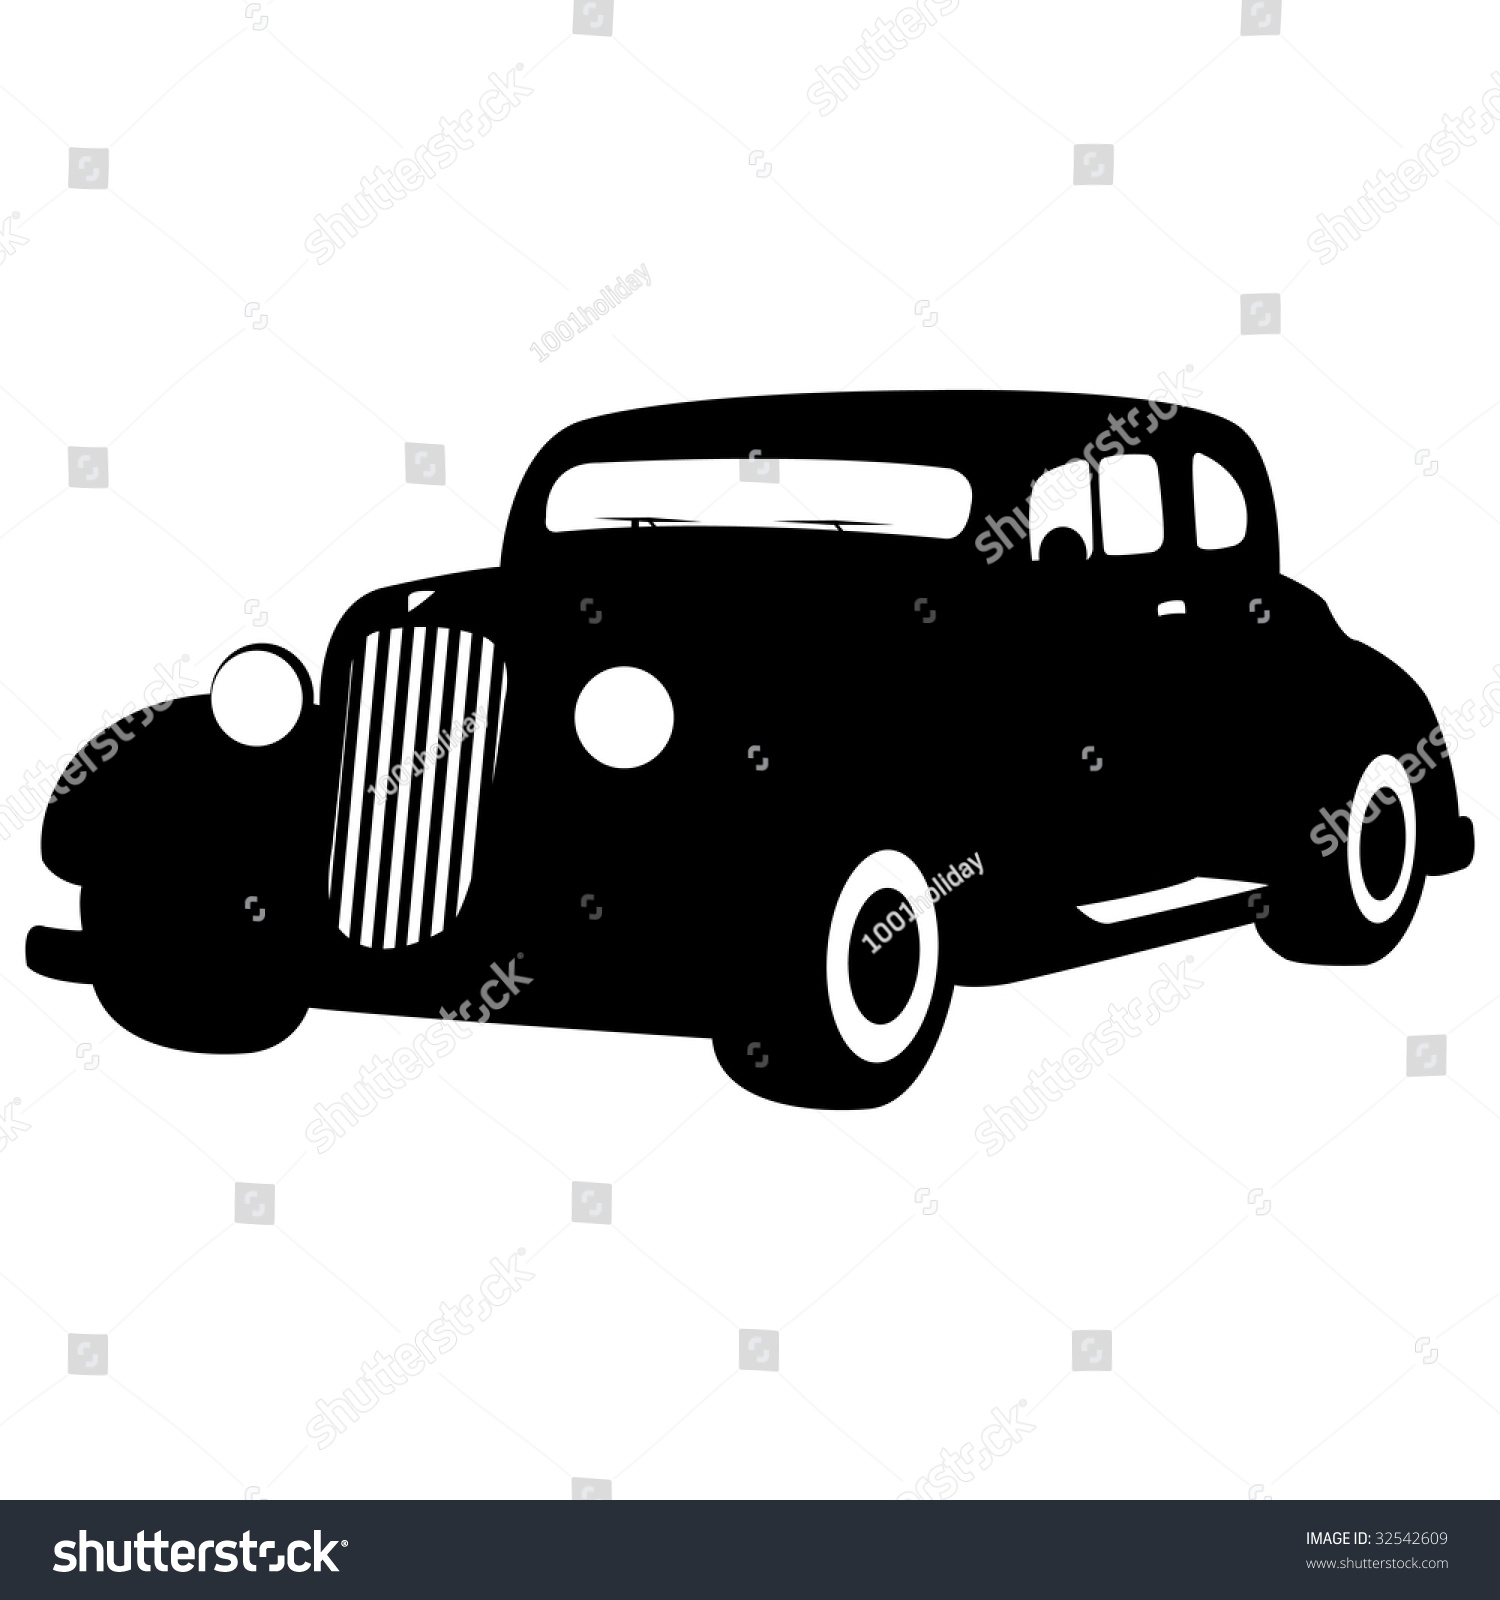 Black Gradiented Vintage Car, Vector Illustration - 32542609 : Shutterstock